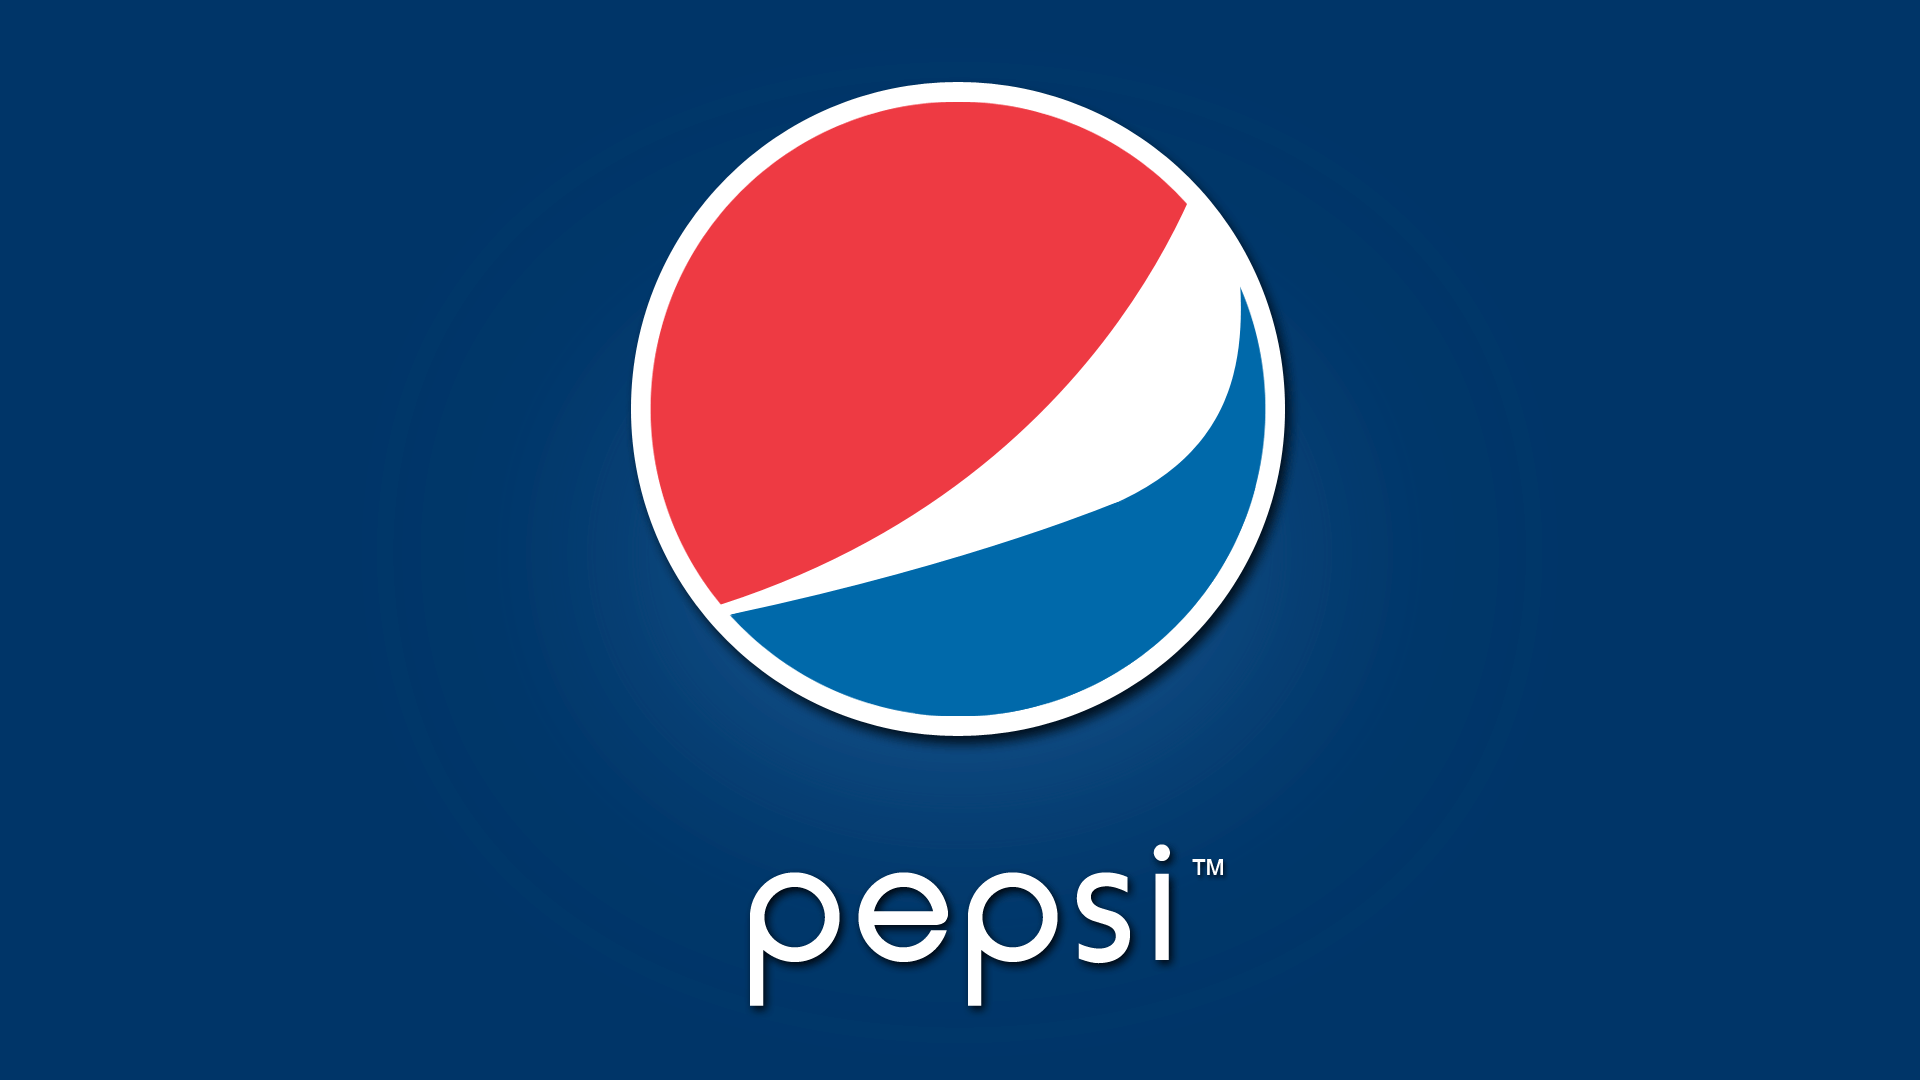 Pepsi Logo Wallpaper Free Download Brand Logo Pepsi Wallpaper